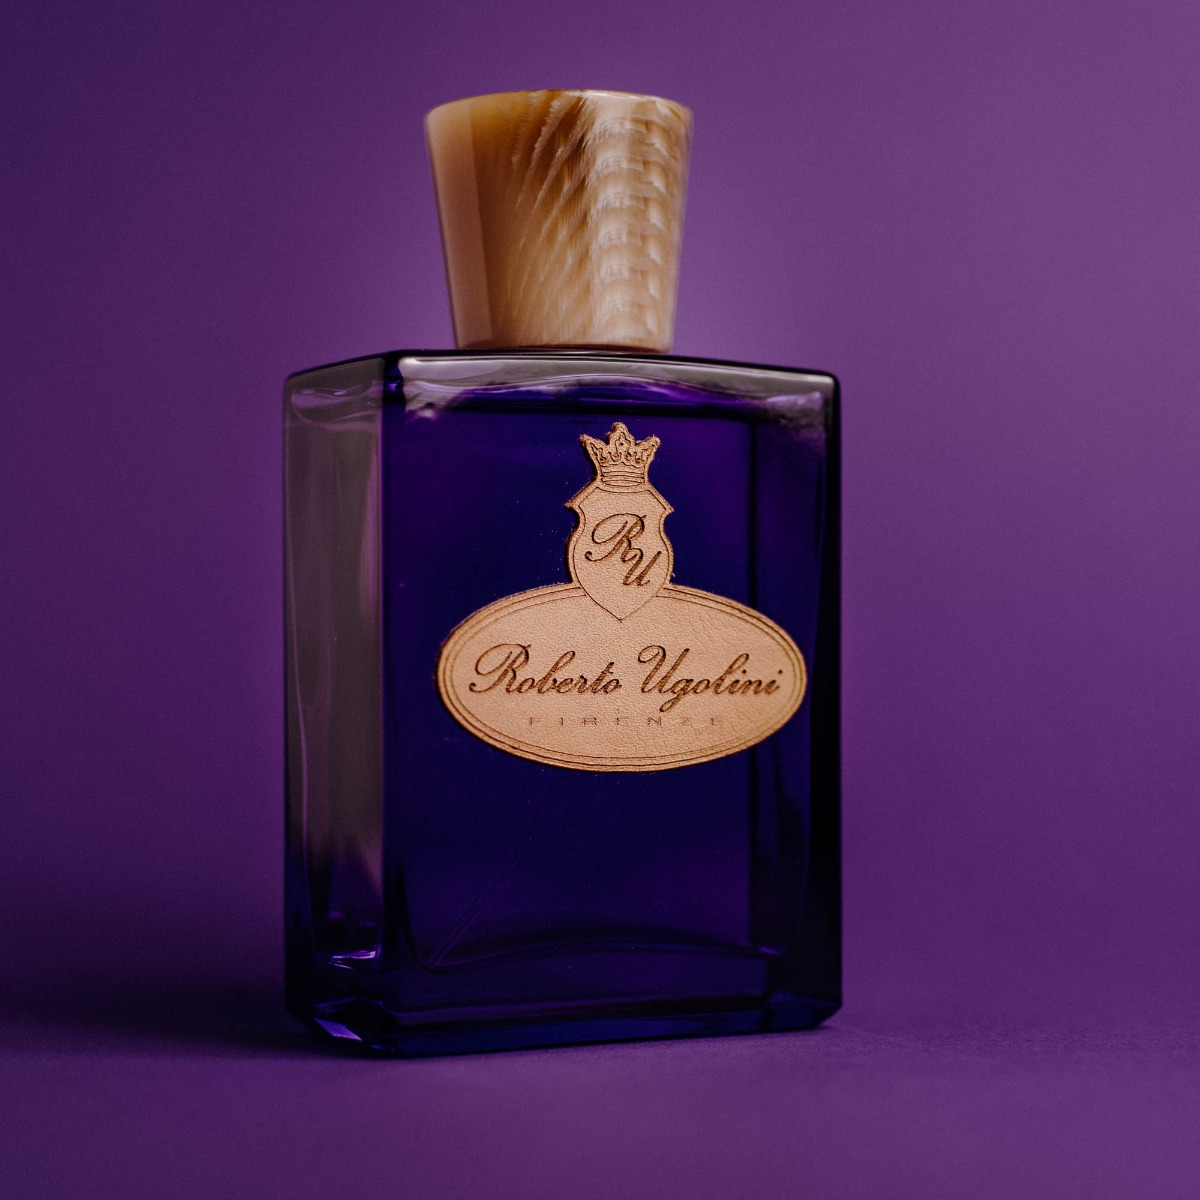 Roberto Ugolini Marzocco fragrance Flacon on purple background